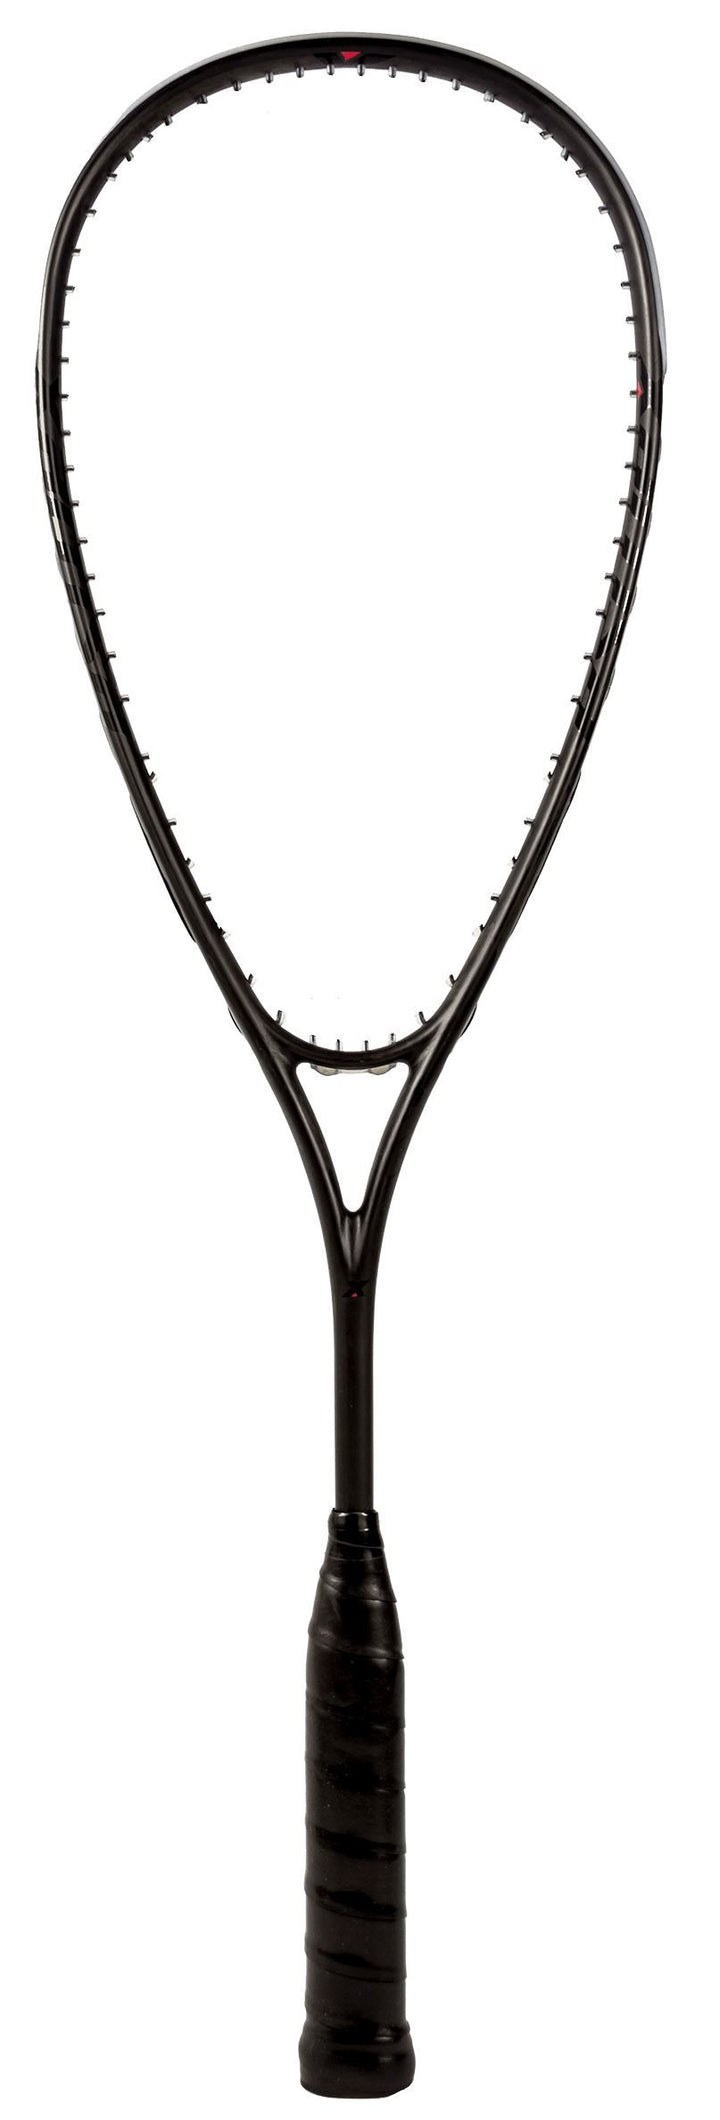 Xamsa Crucible Incognito Squash Racquet Squash Racquets Xamsa No strings 